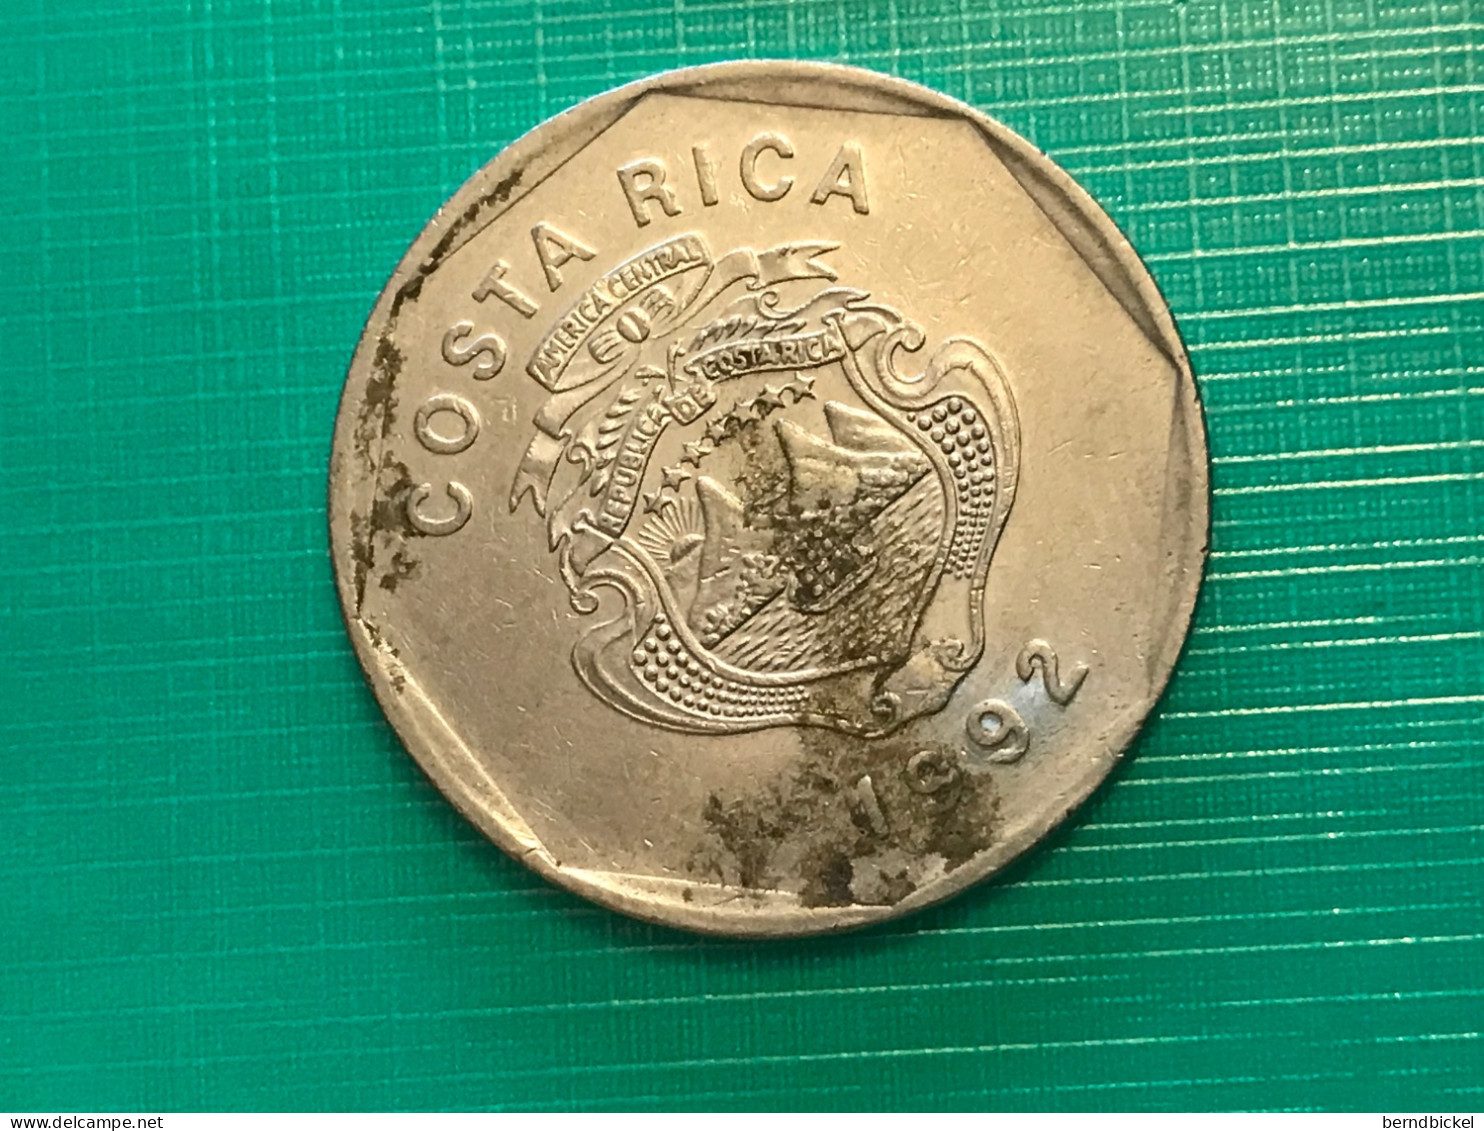 Münze Münzen Umlaufmünze Costa Rica 10 Colones 1992 - Costa Rica